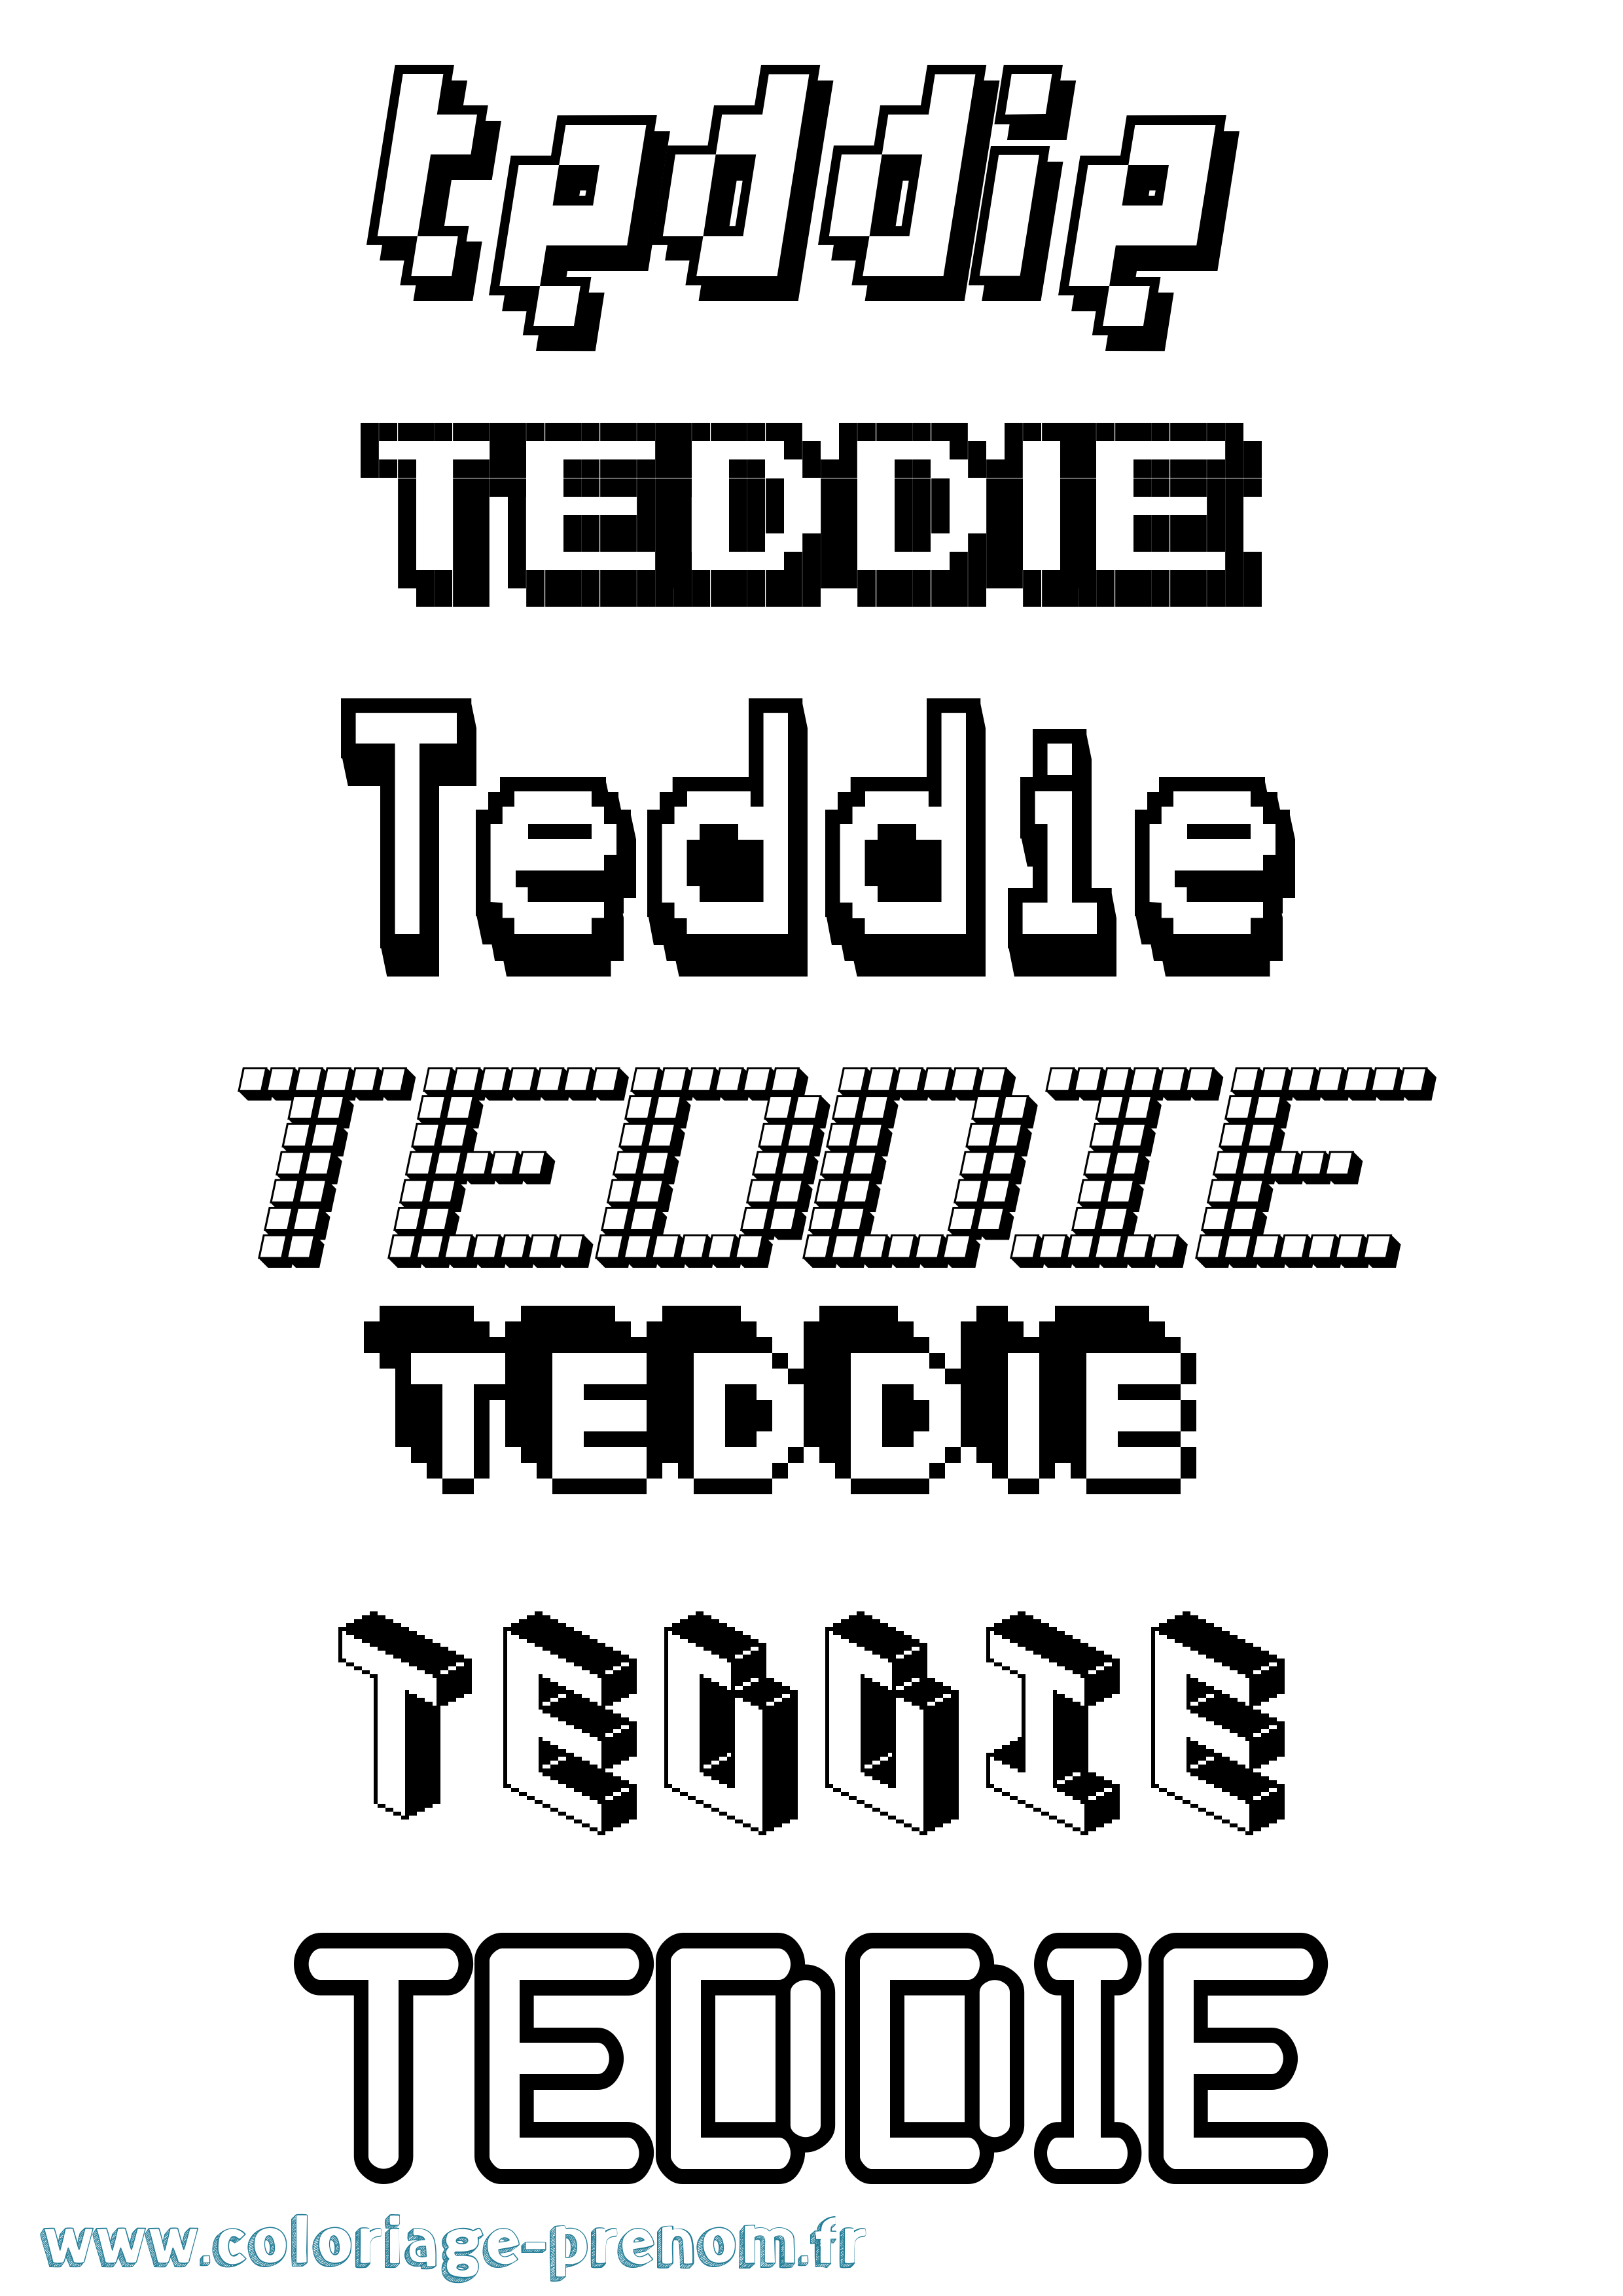 Coloriage prénom Teddie Pixel